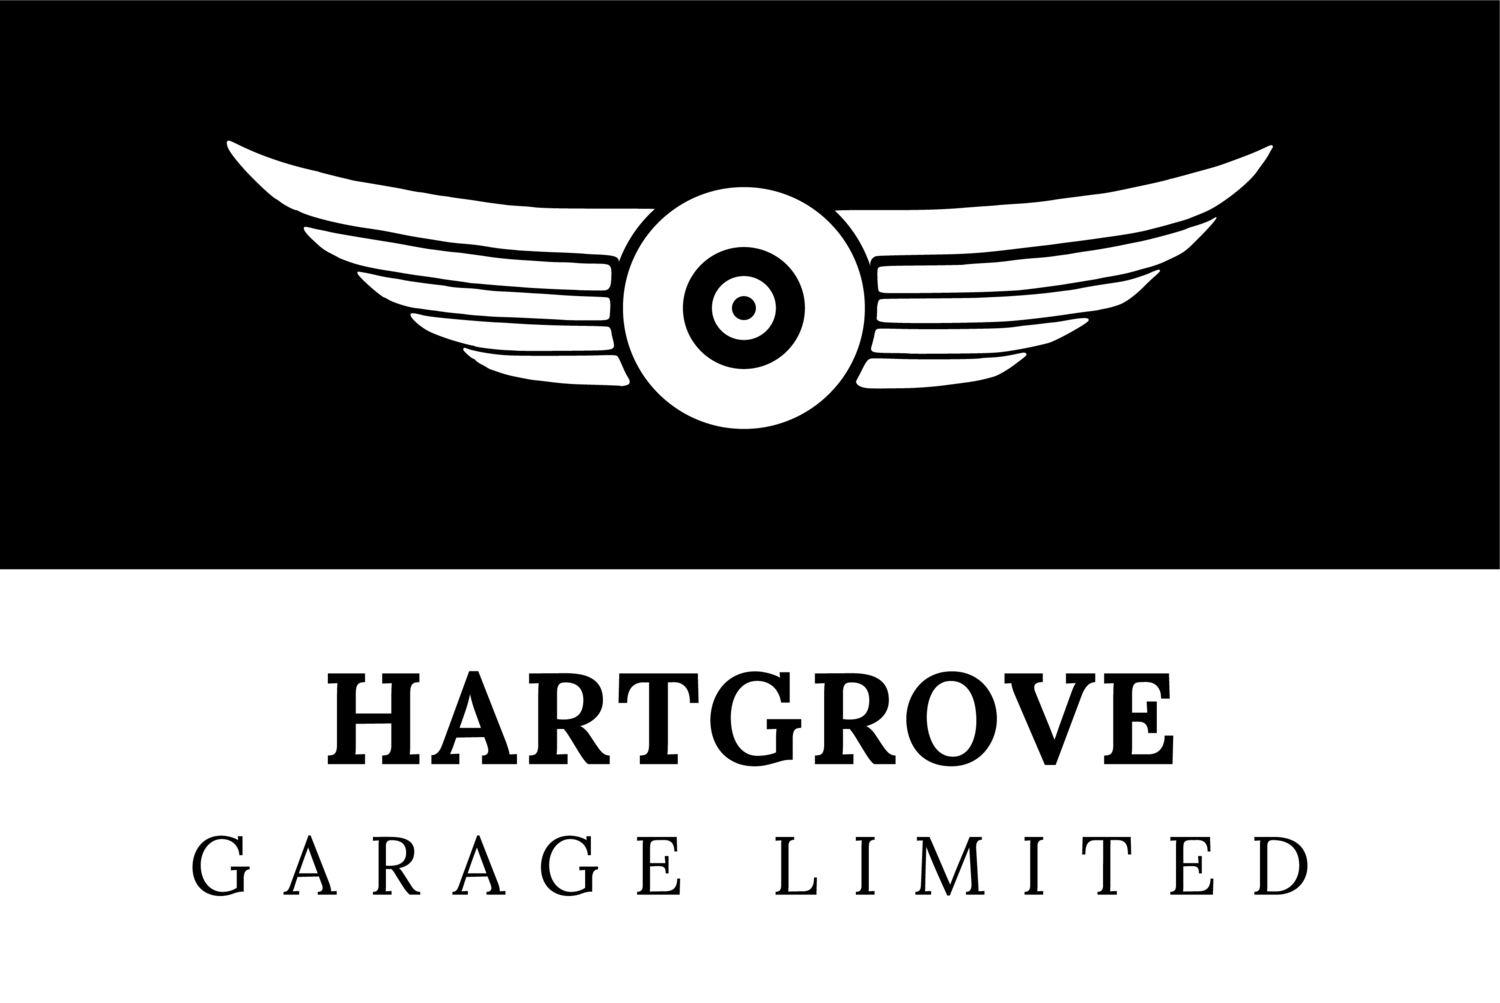 Hartgrove Garage